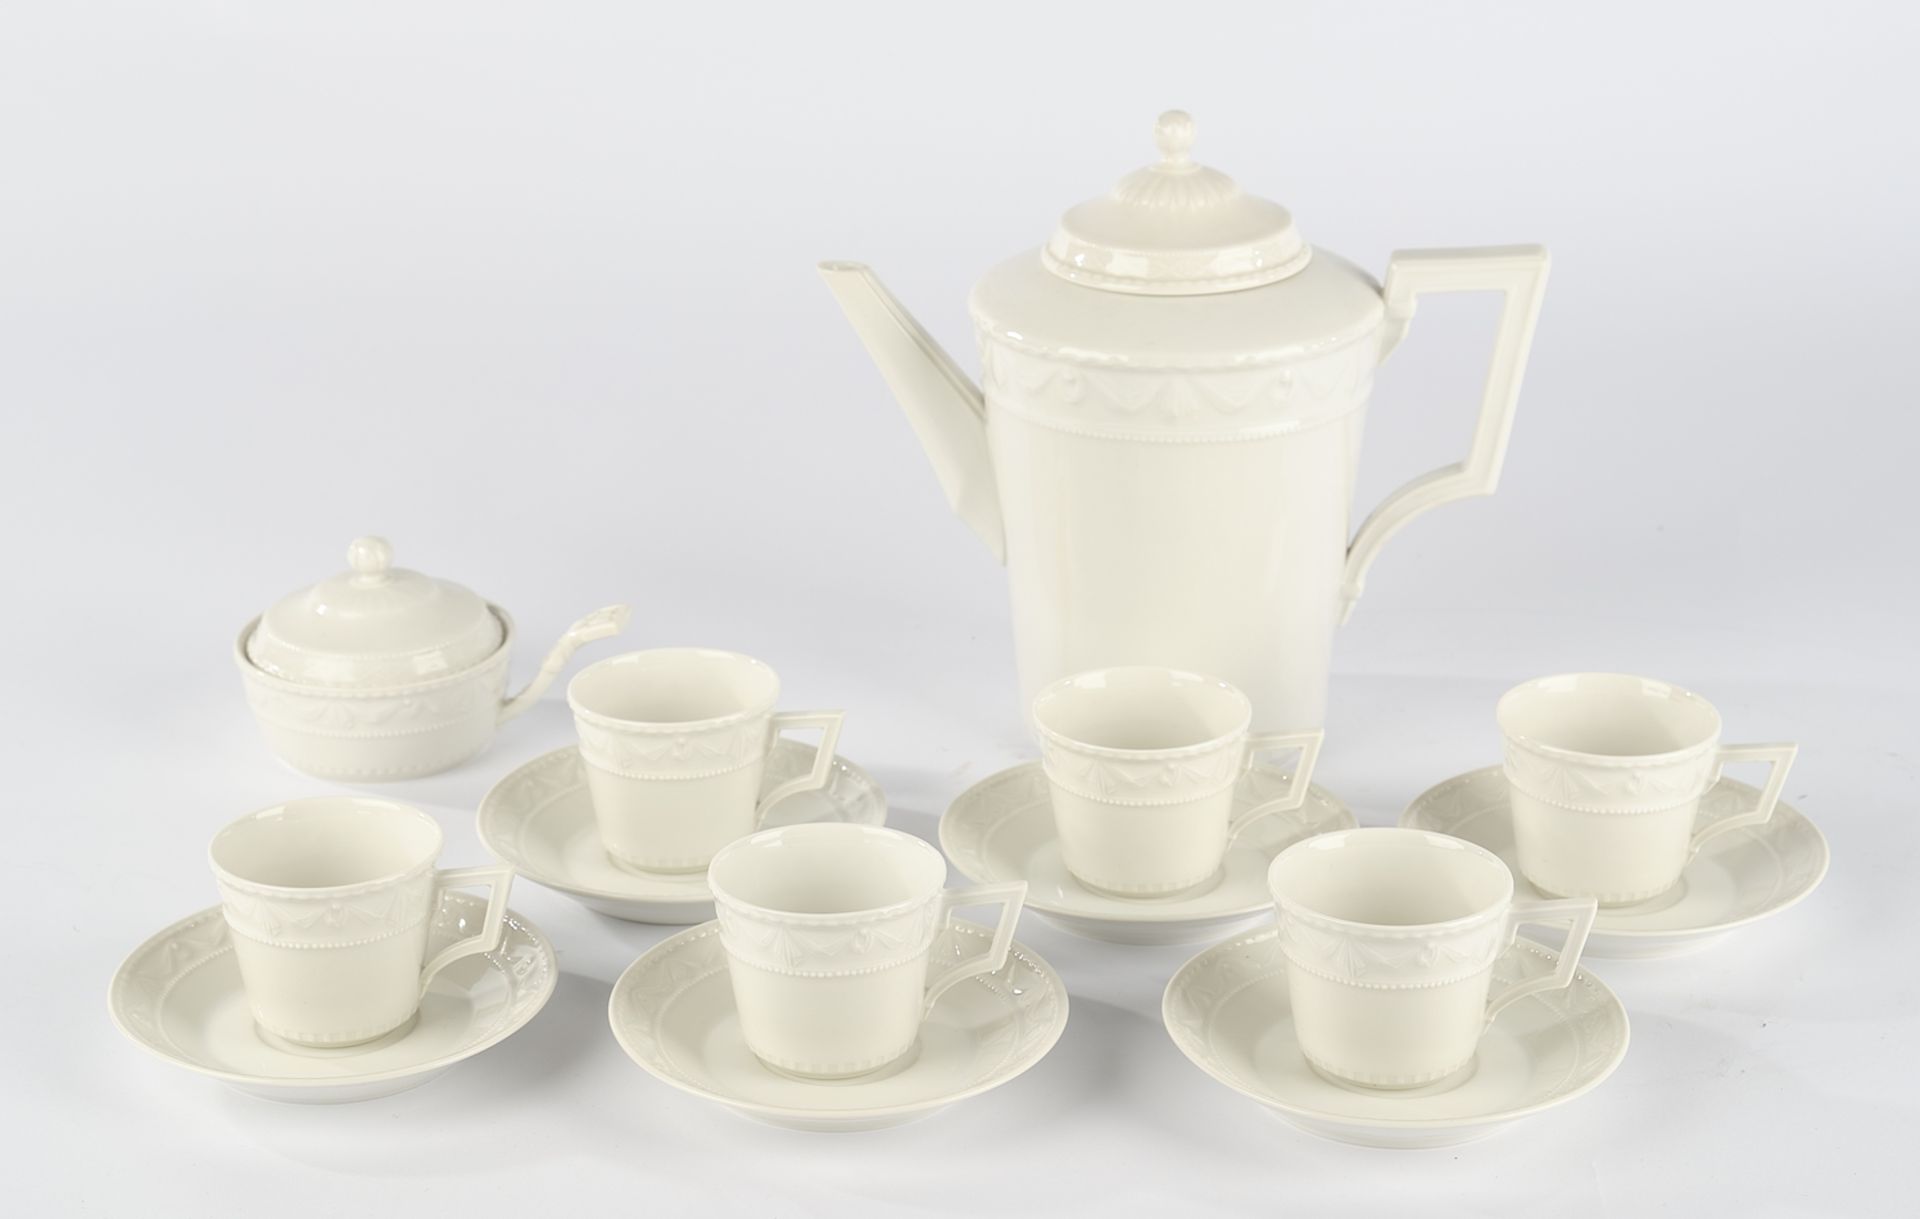 Service pieces, 14-piece, Kurland, KPM Berlin, white porcelain: coffee pot, 6 demitasse cups (1x ch